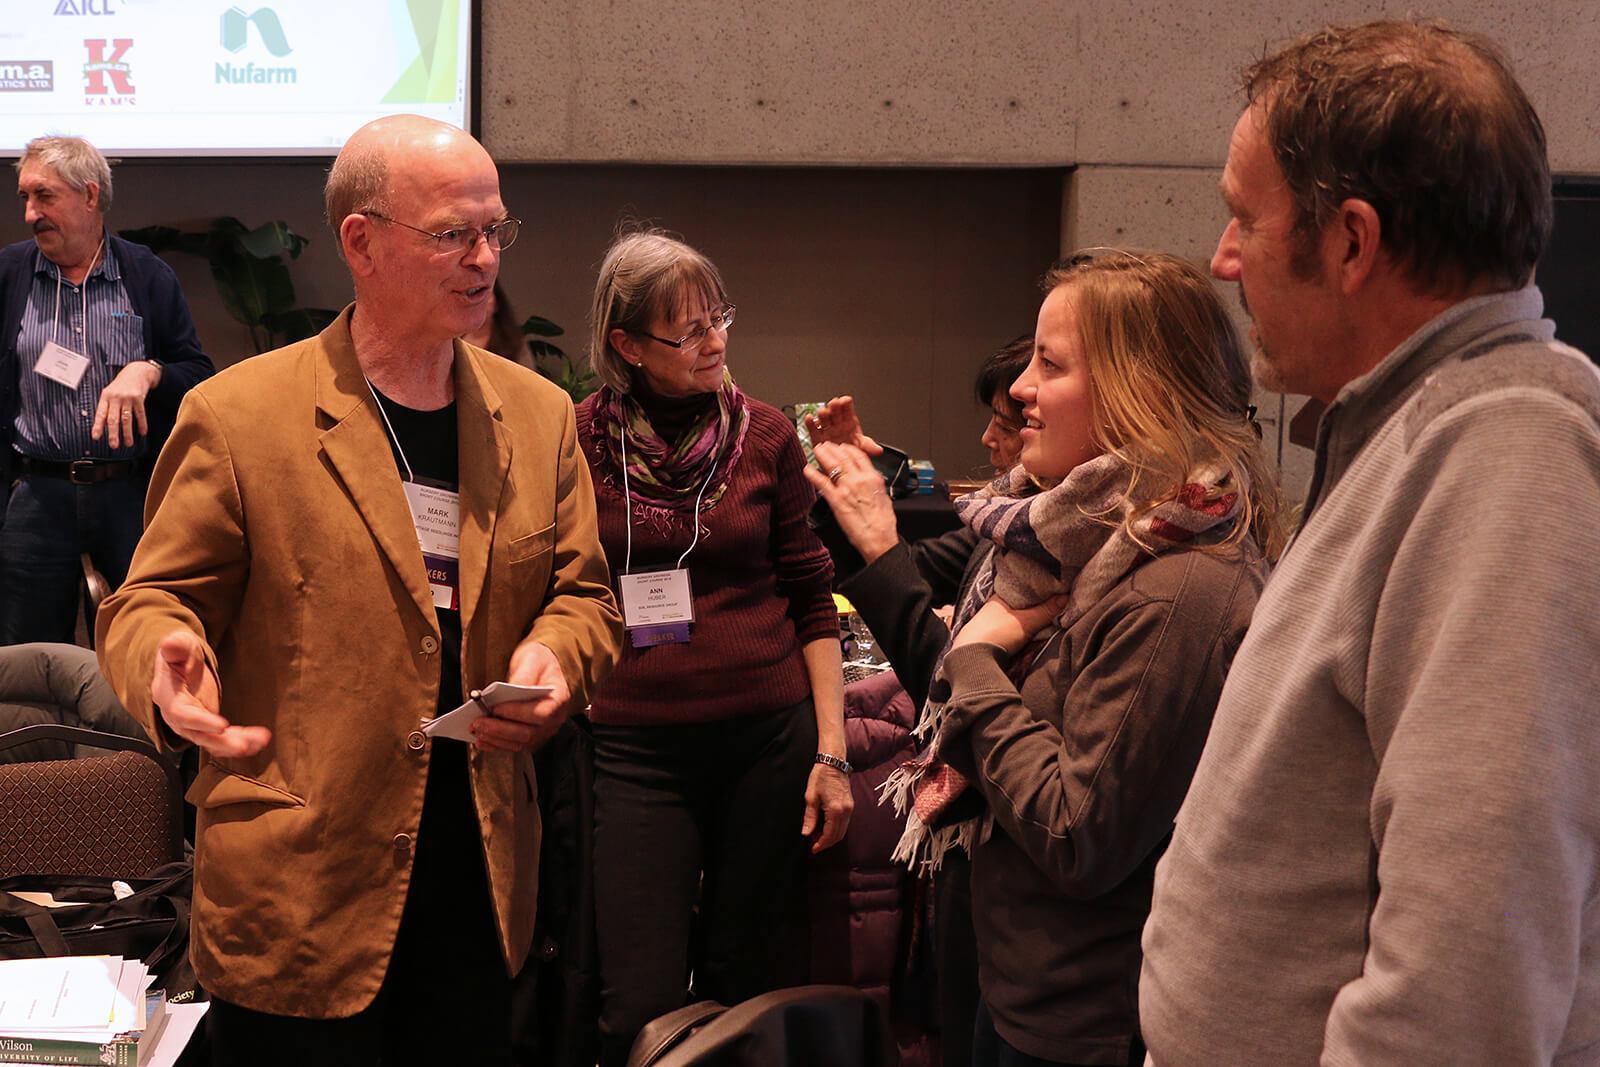 Keynote speaker, Mark Krautmann (left), talks with attendees during a break.